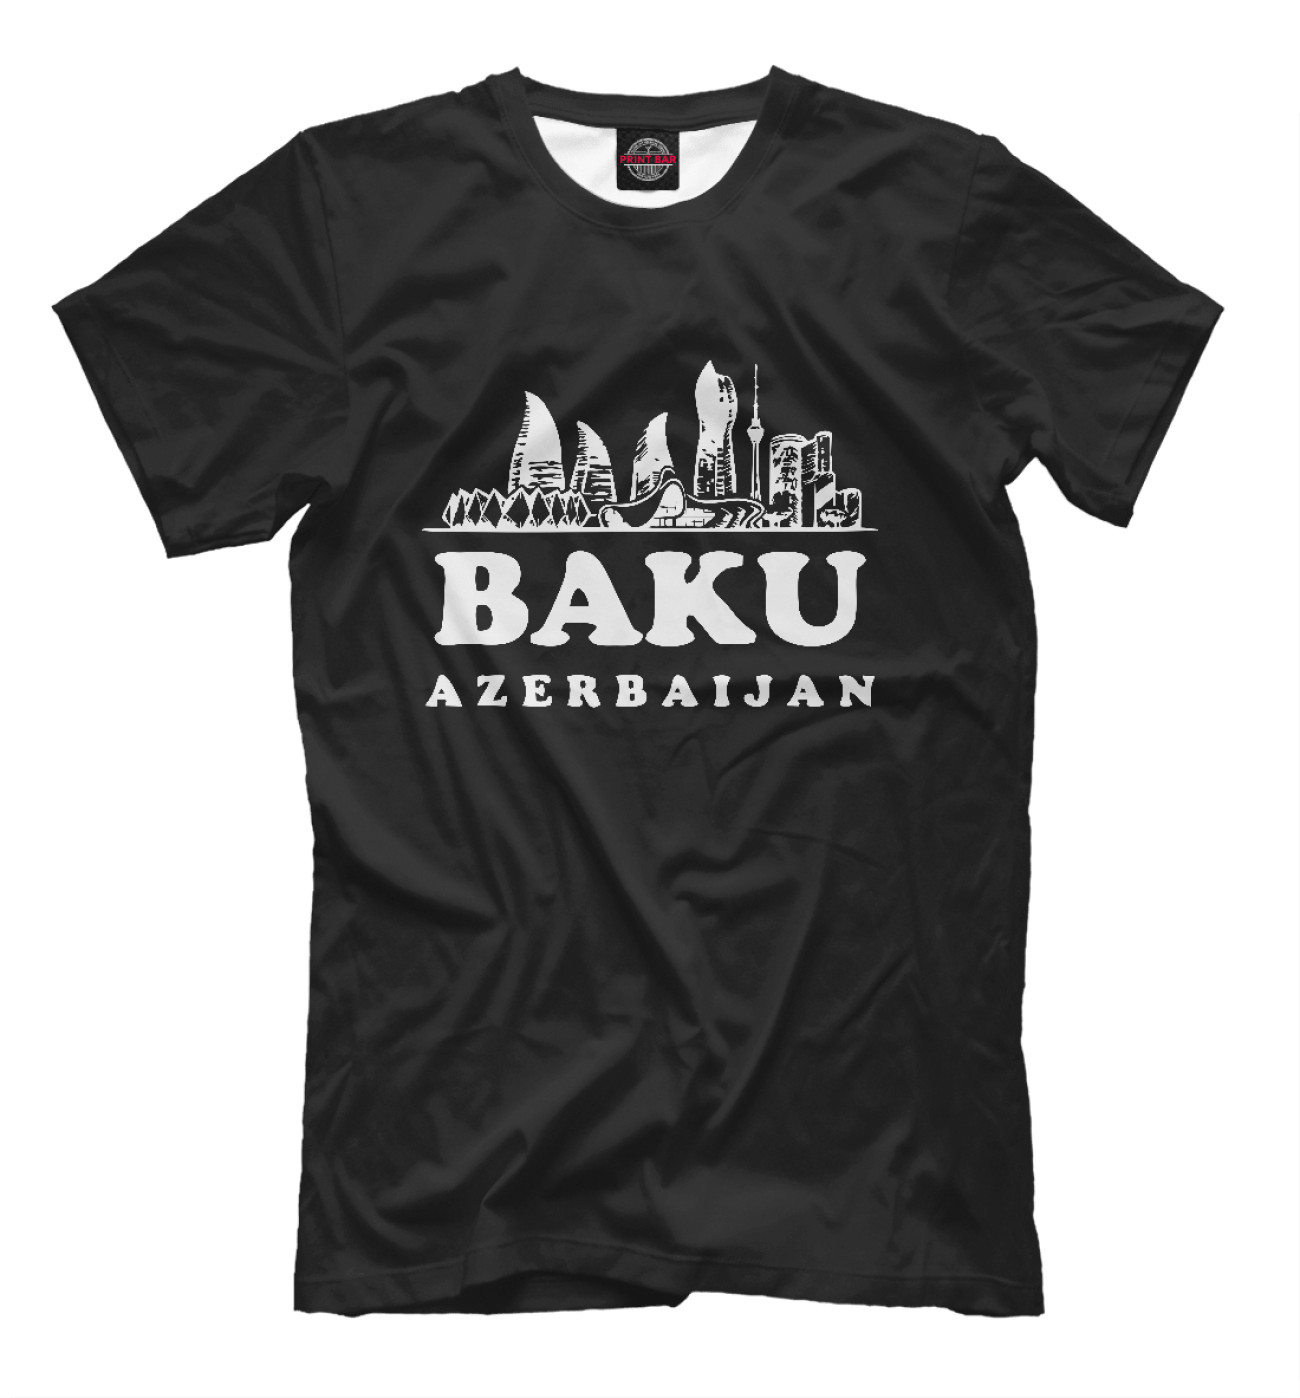 Мужская Футболка Азербайджан, артикул: AZR-899924-fut-2